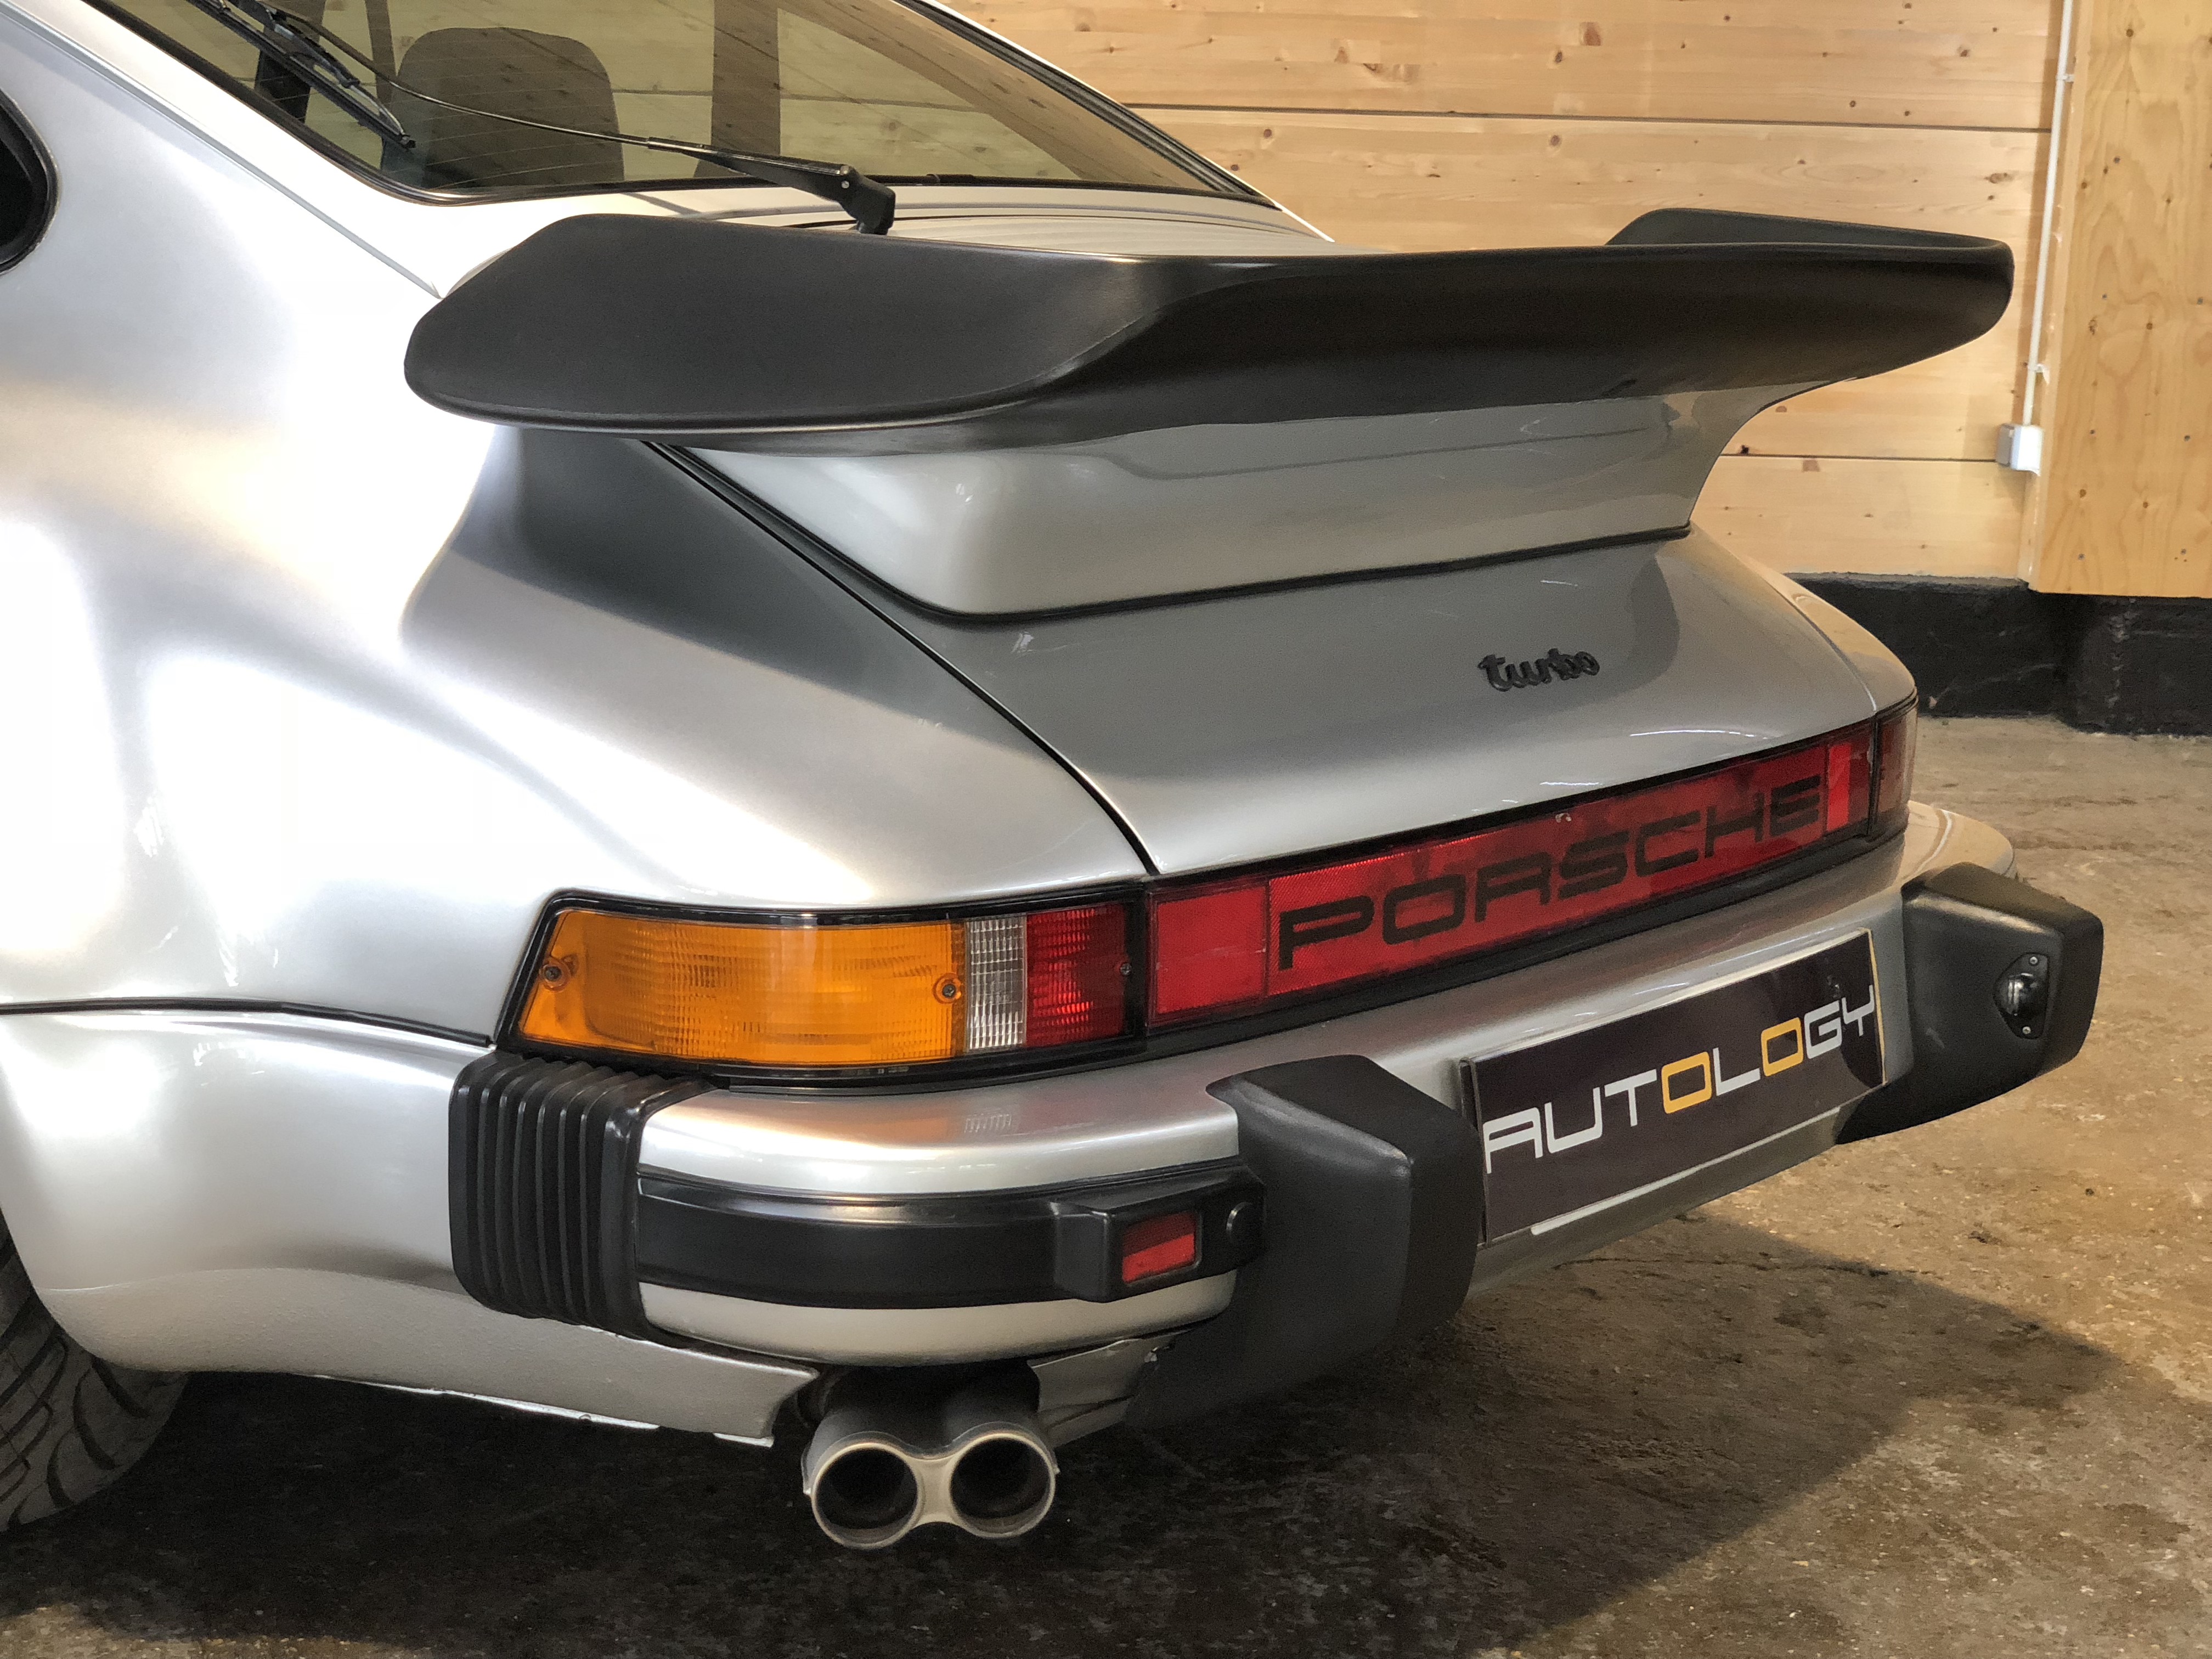 Porsche 911 Turbo 3.3